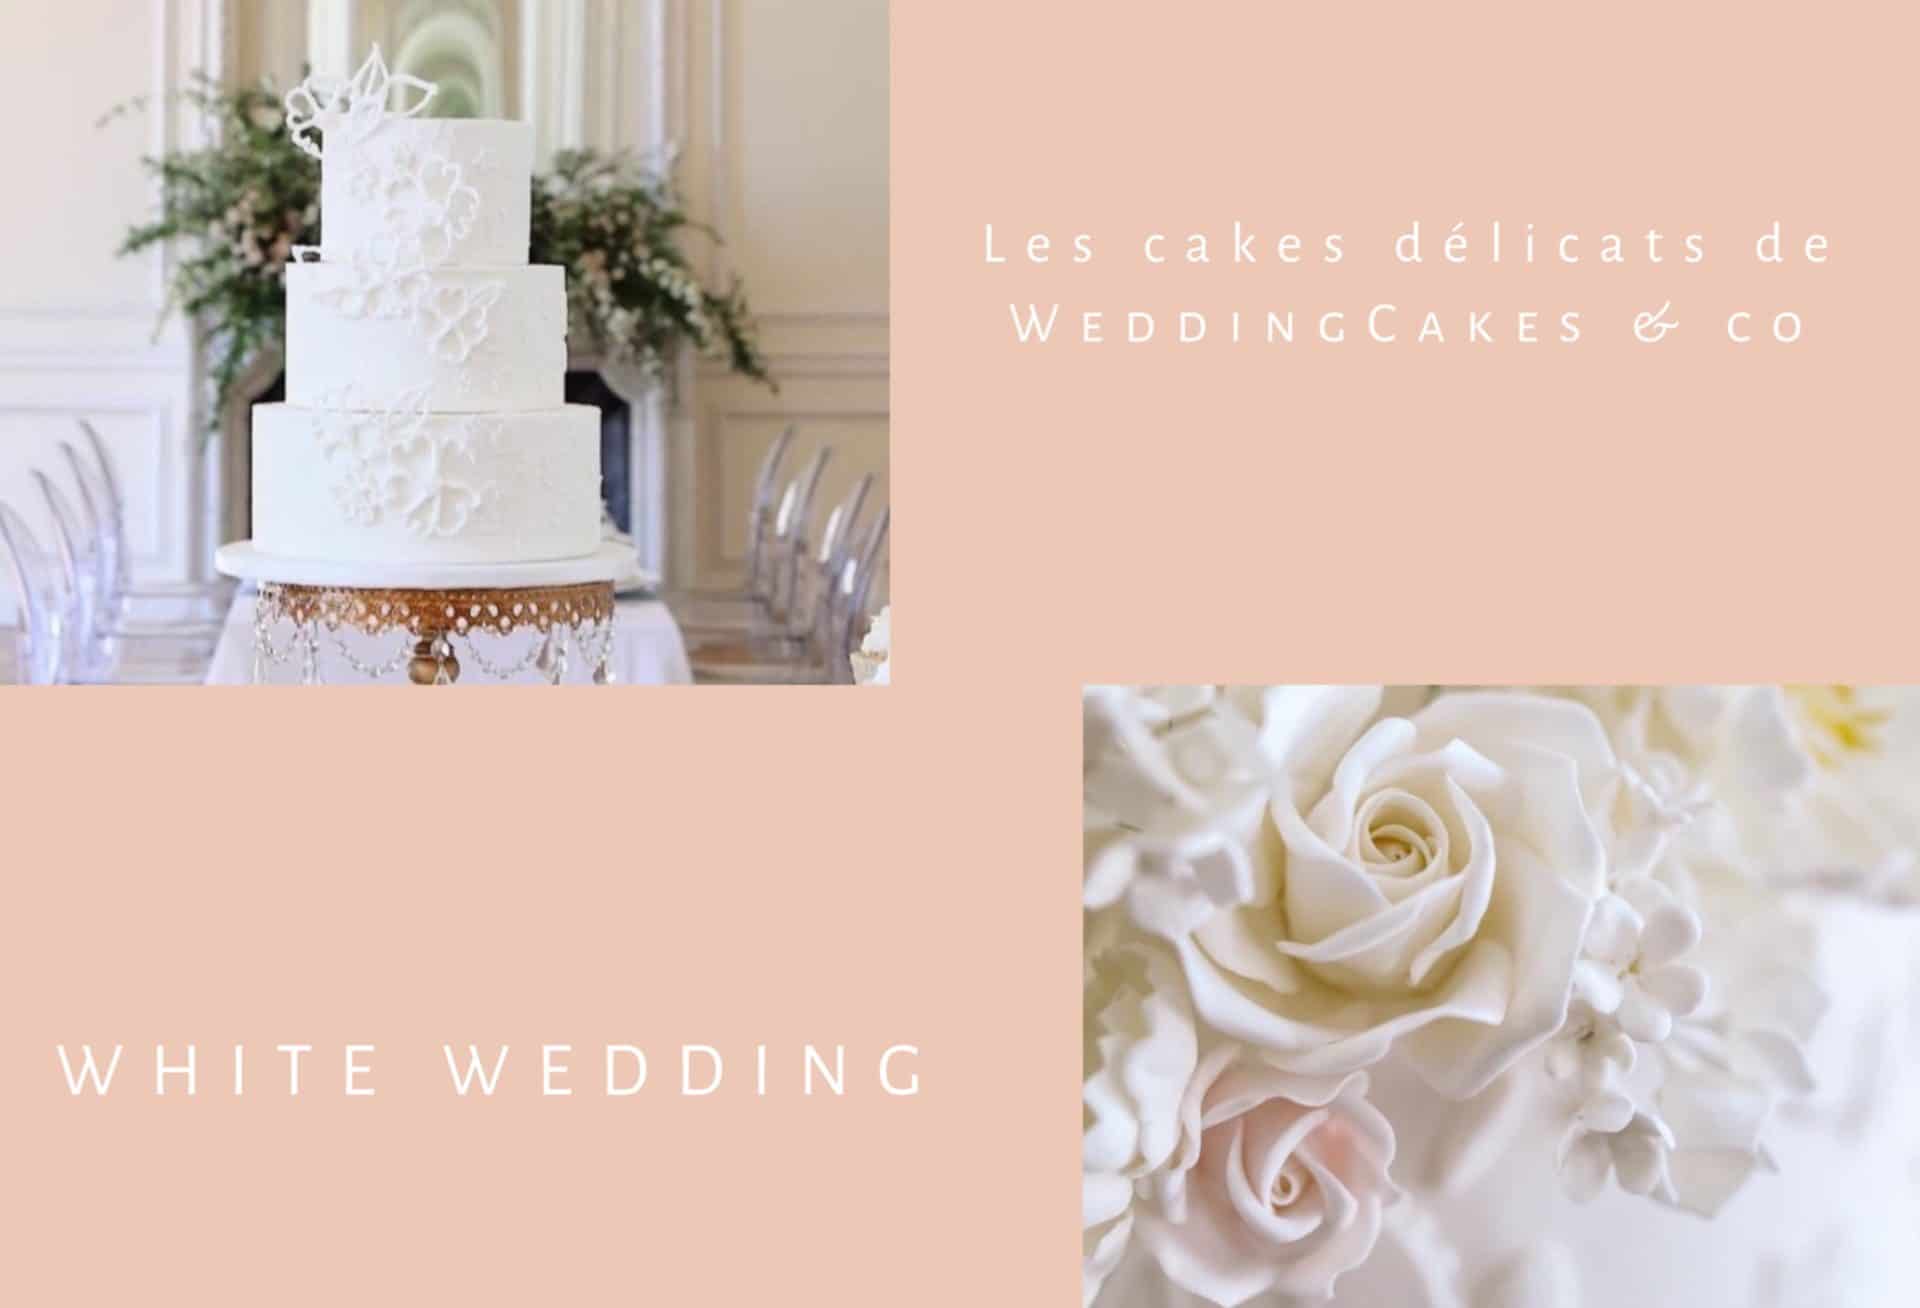 créations de Wedding Cakes & co White